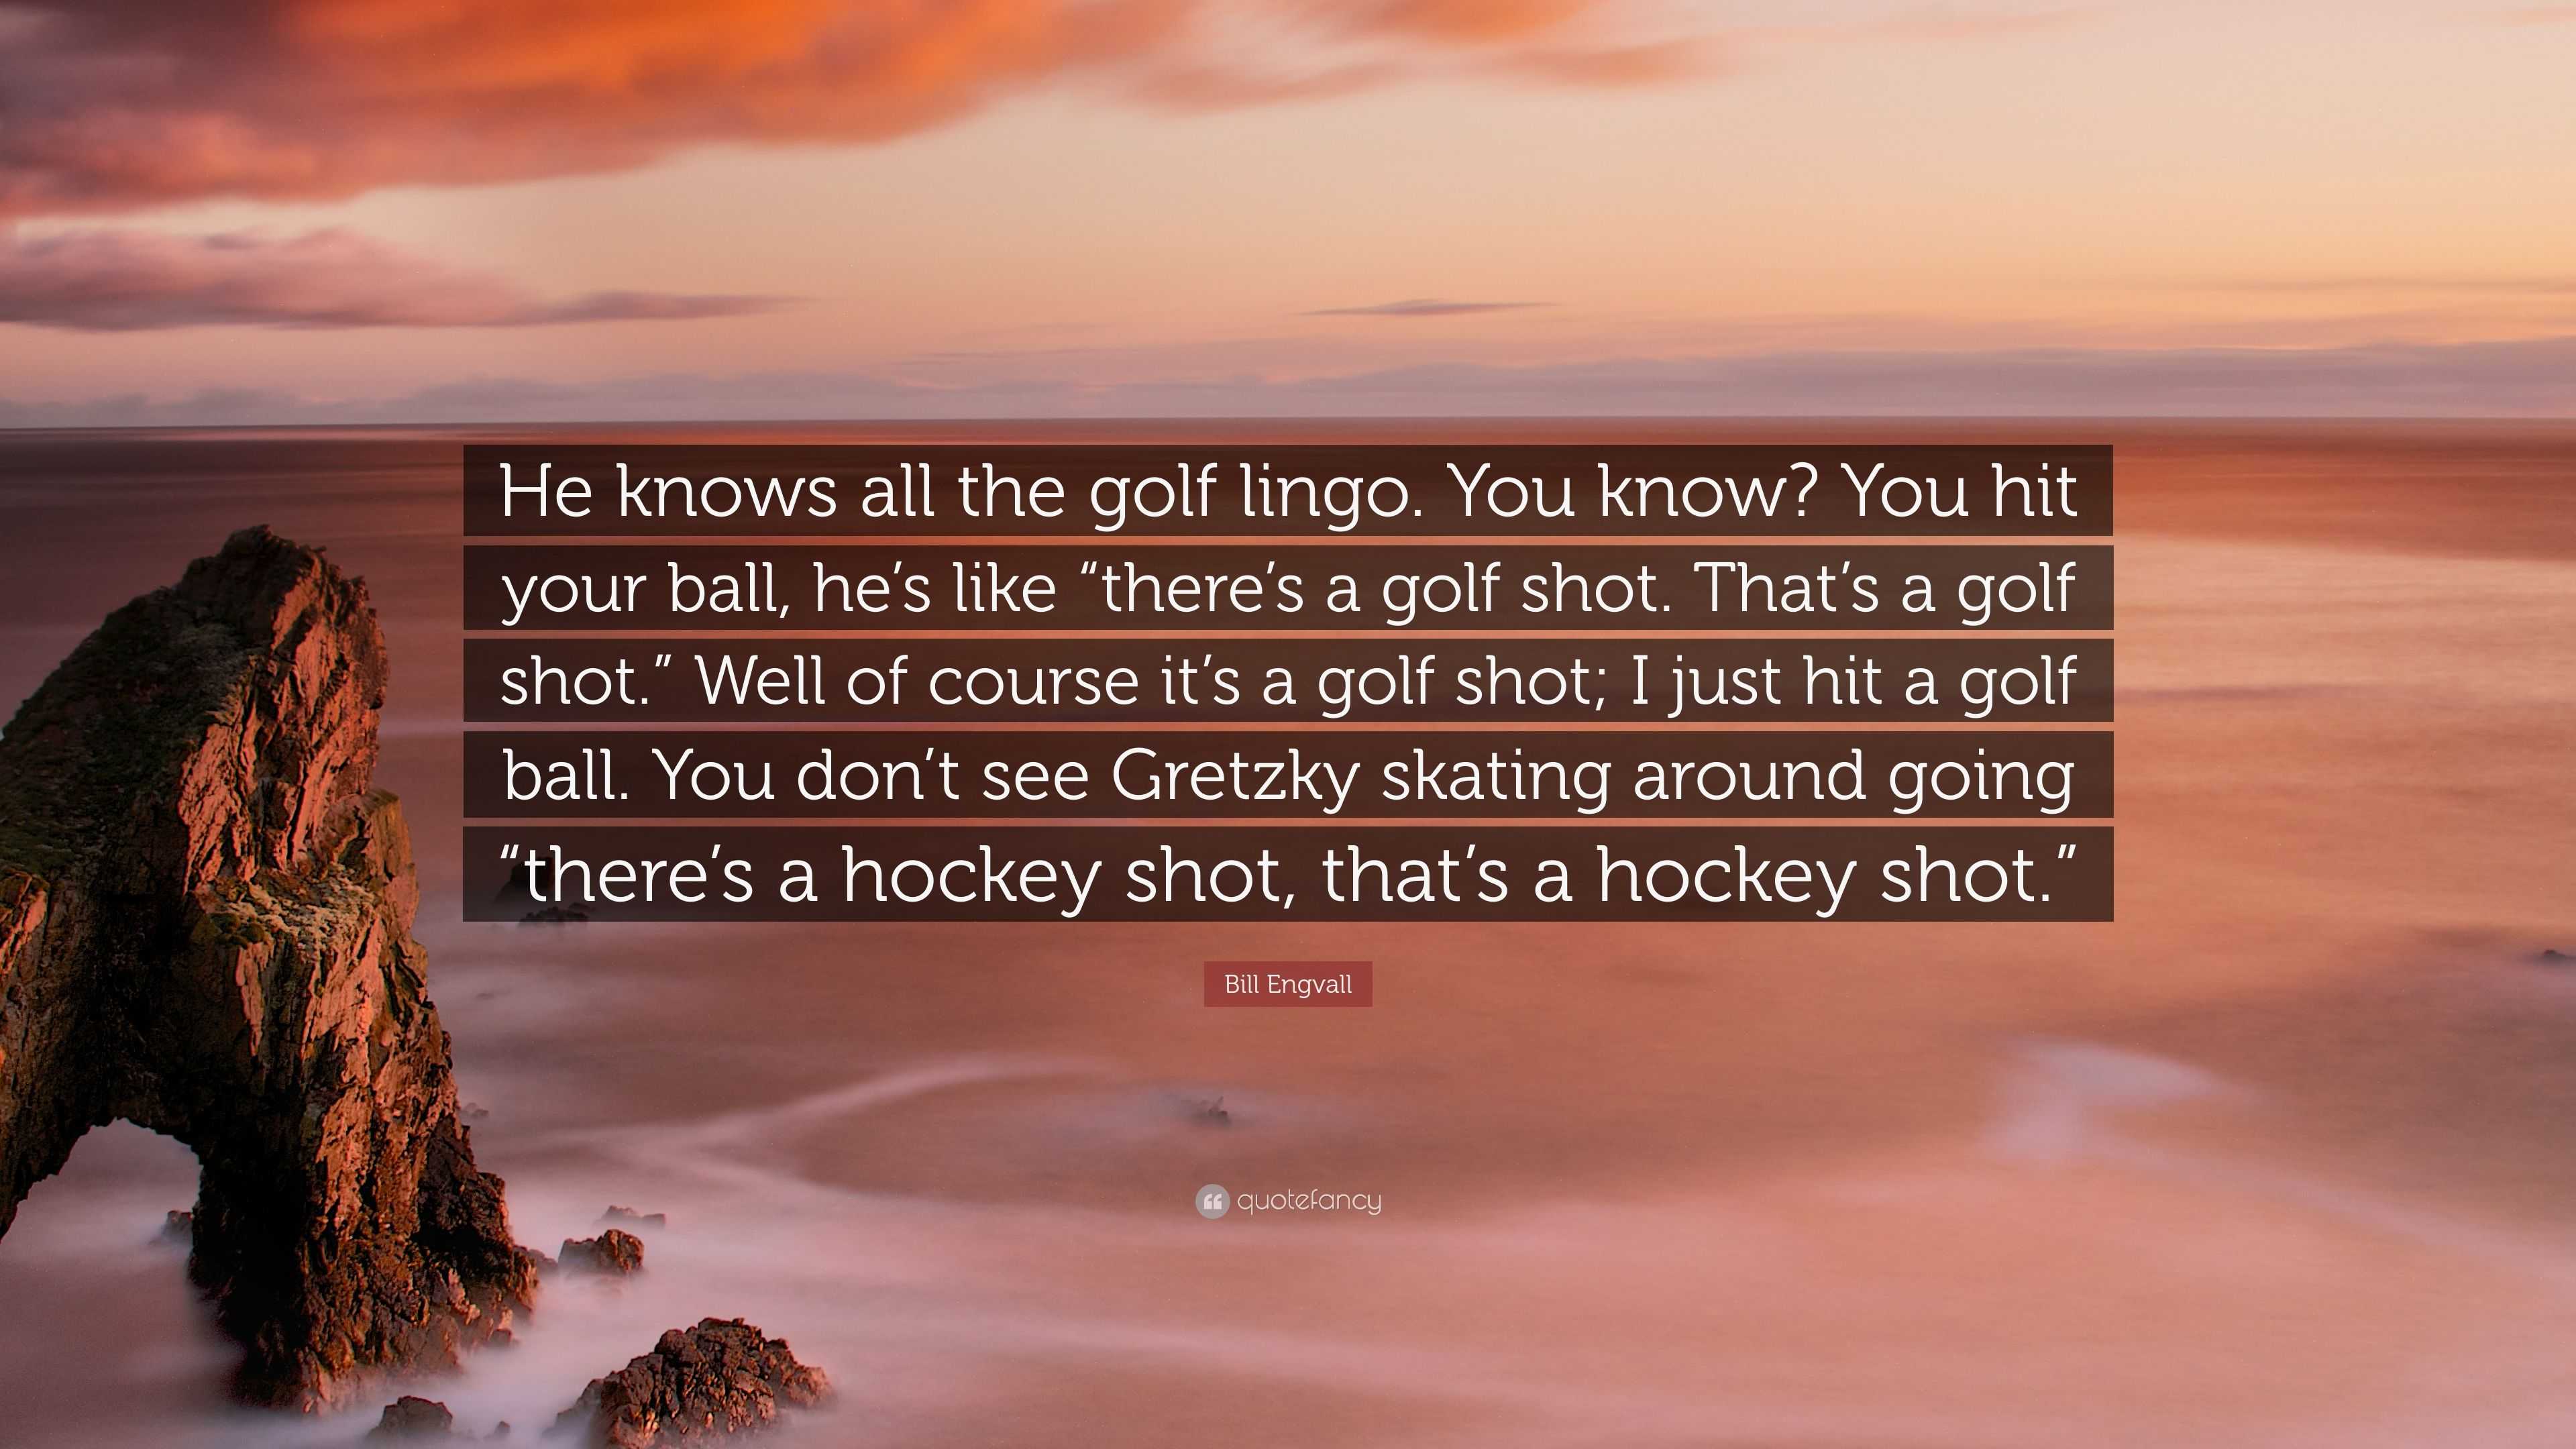 shoot well in golf lingo